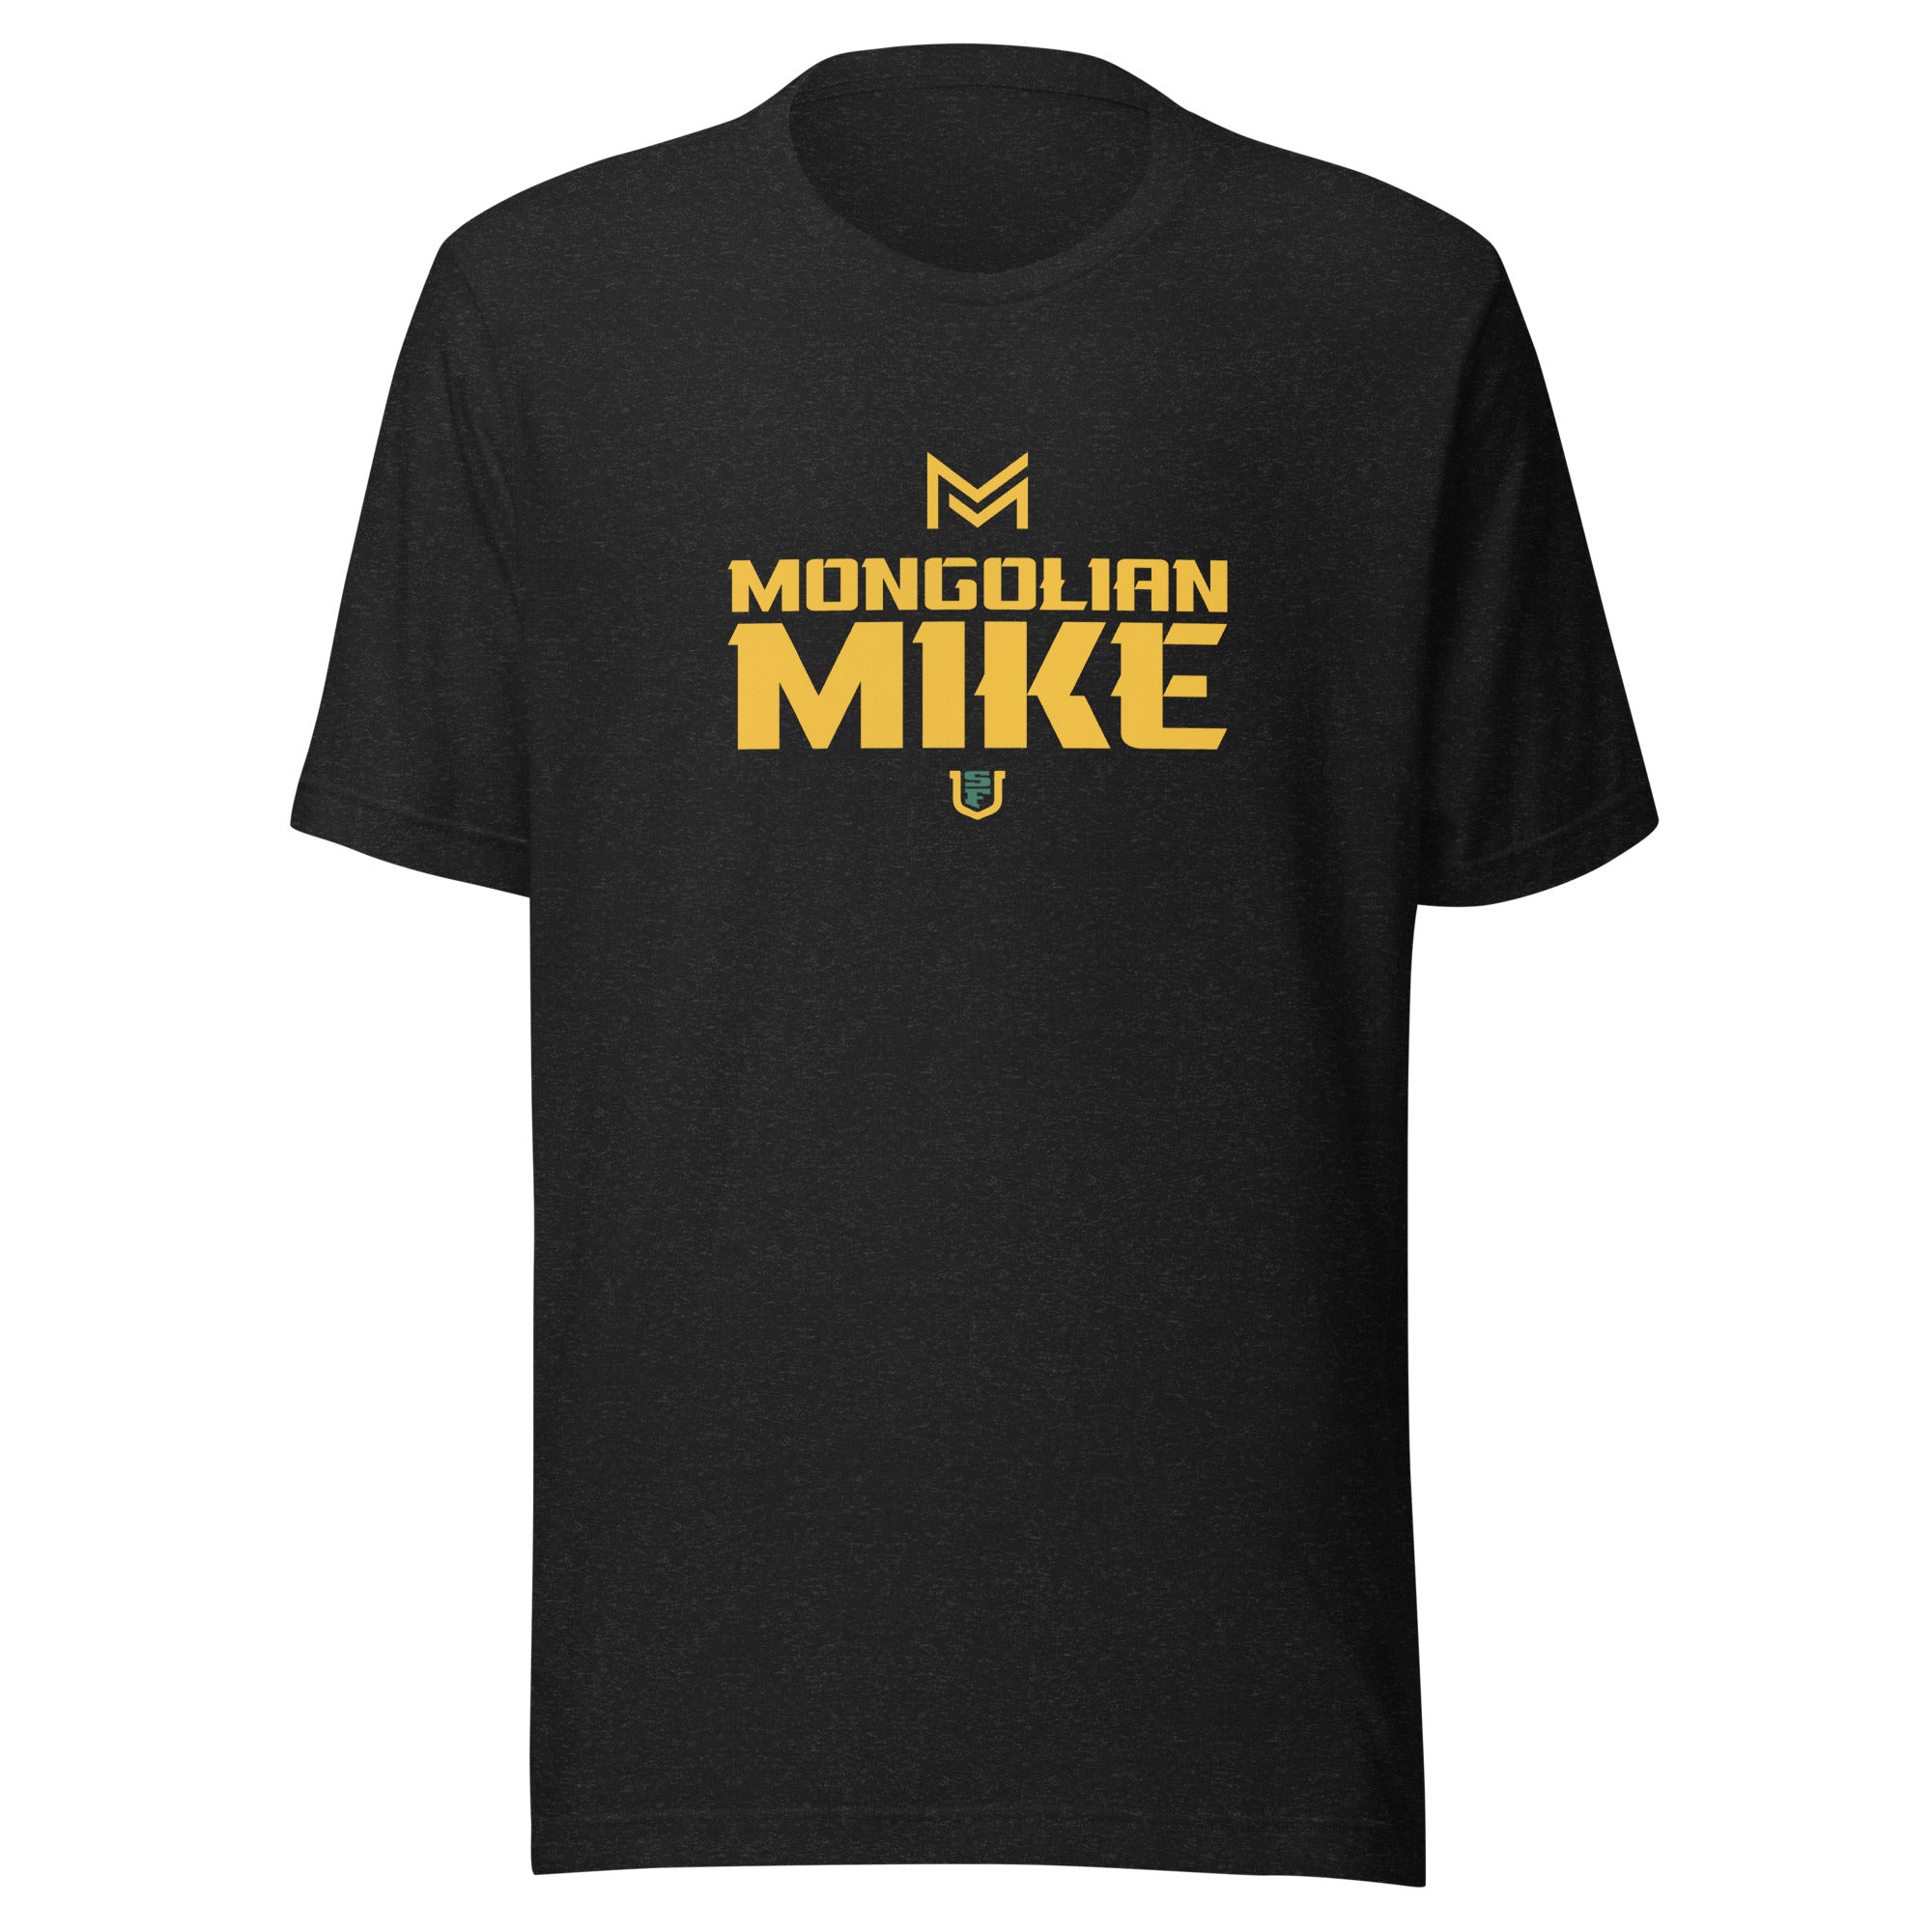 MM Mongolian Mike Unisex t-shirt